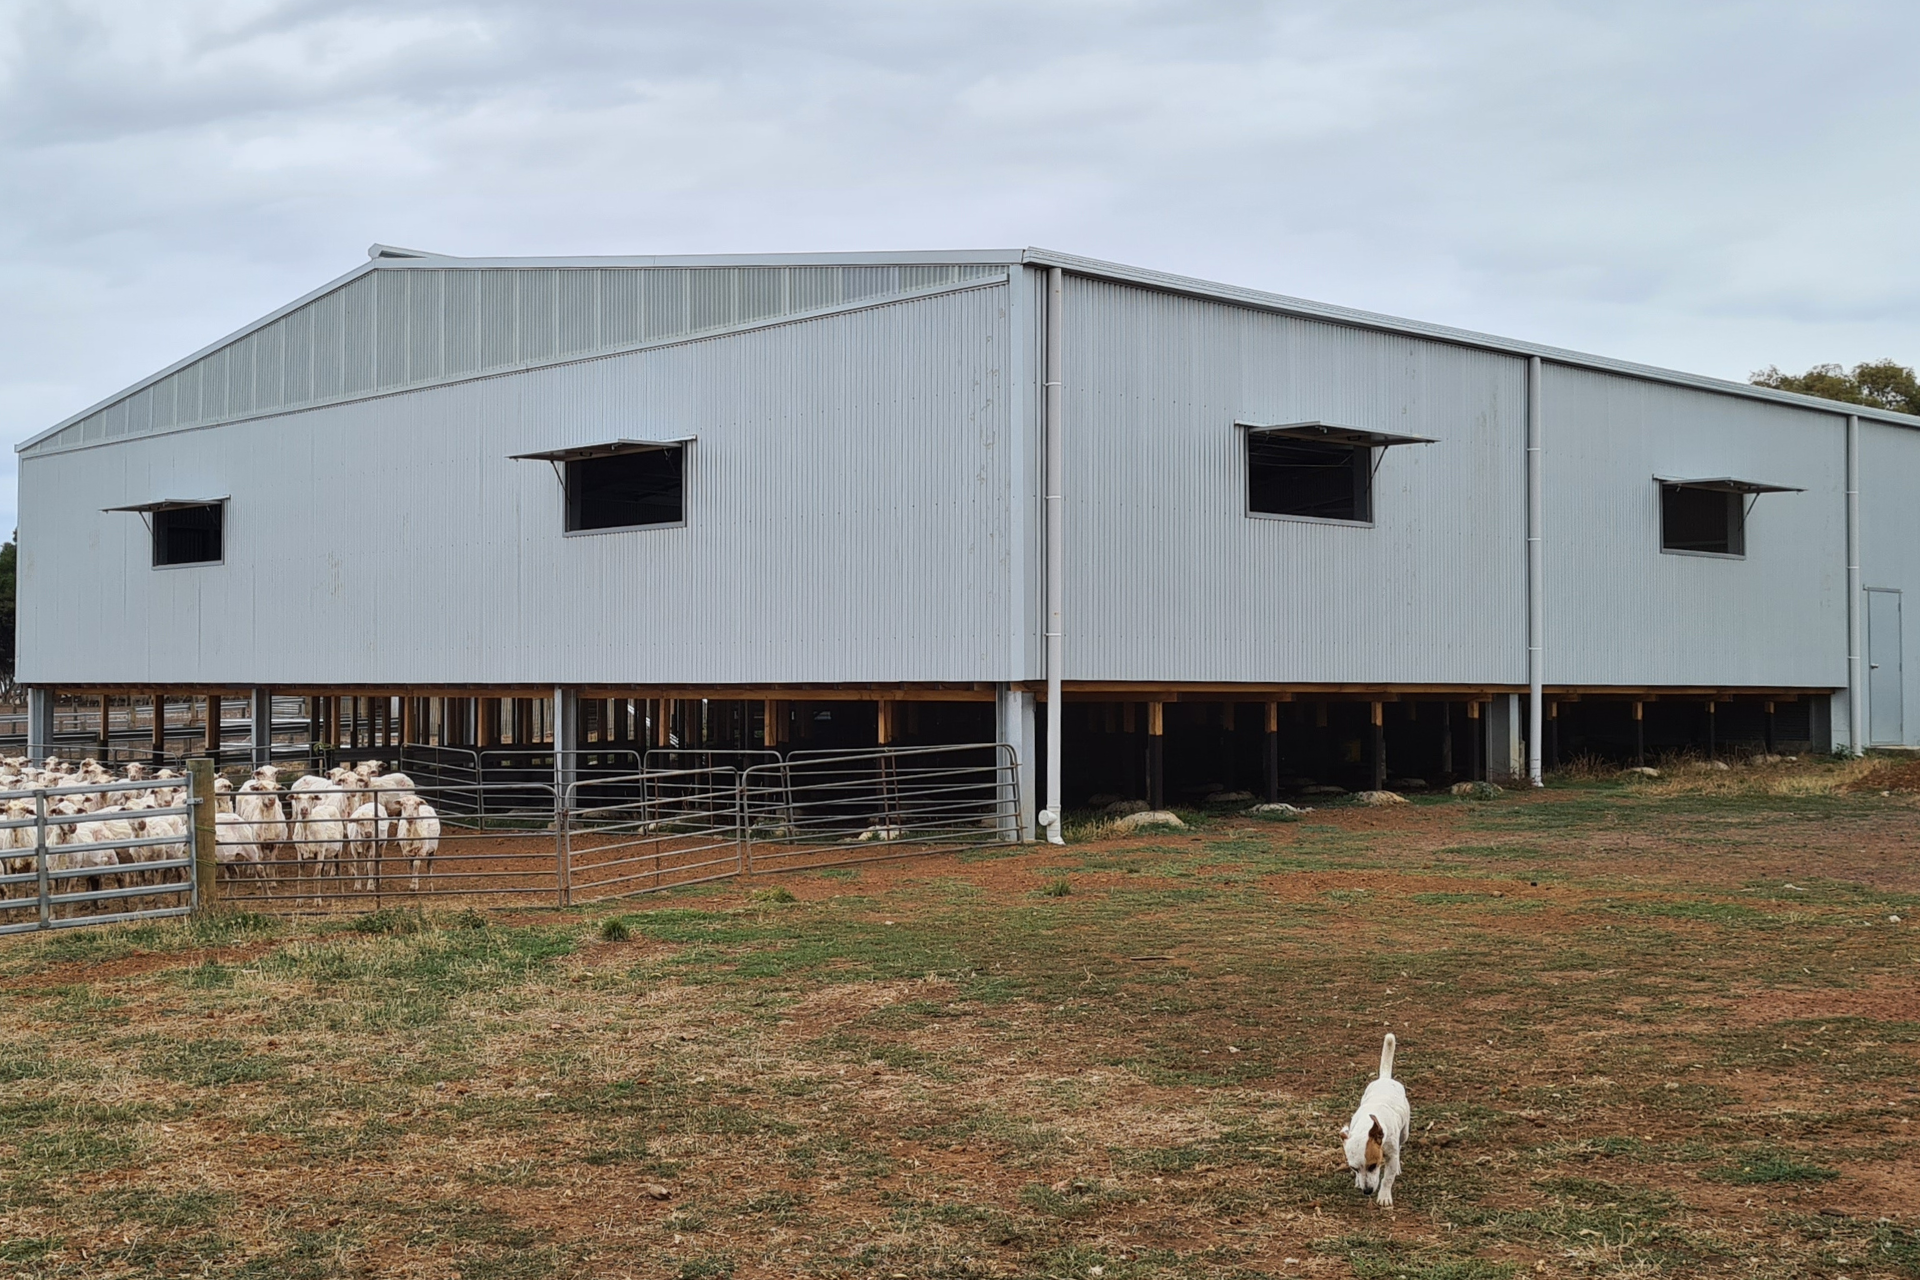 A 24m x 21m x 4.5m shearing shed at Tarrenlea VIC